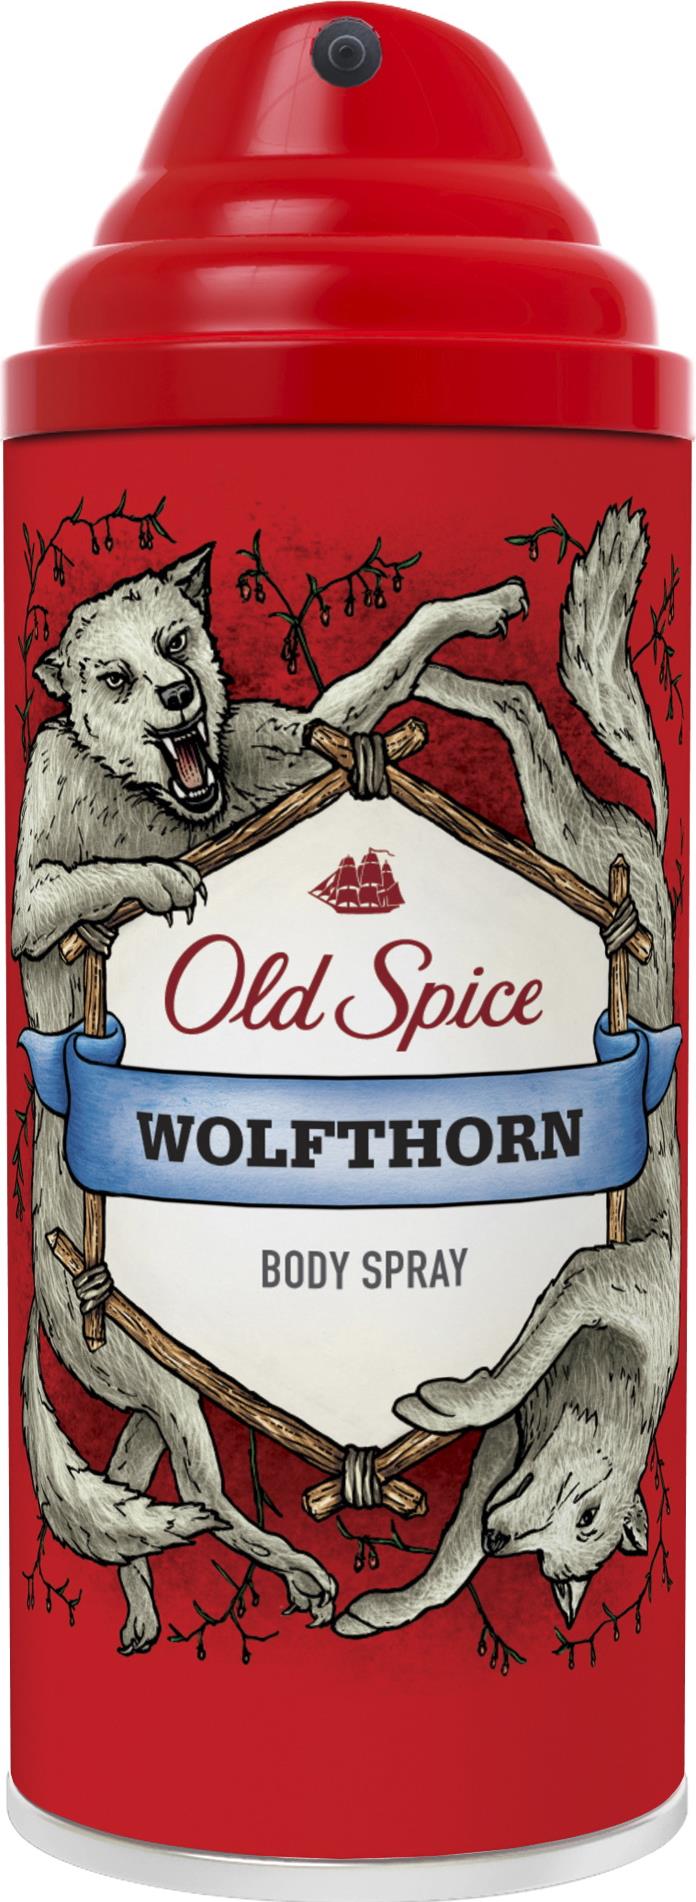 Дезодорант Old Spice Wolfthorn